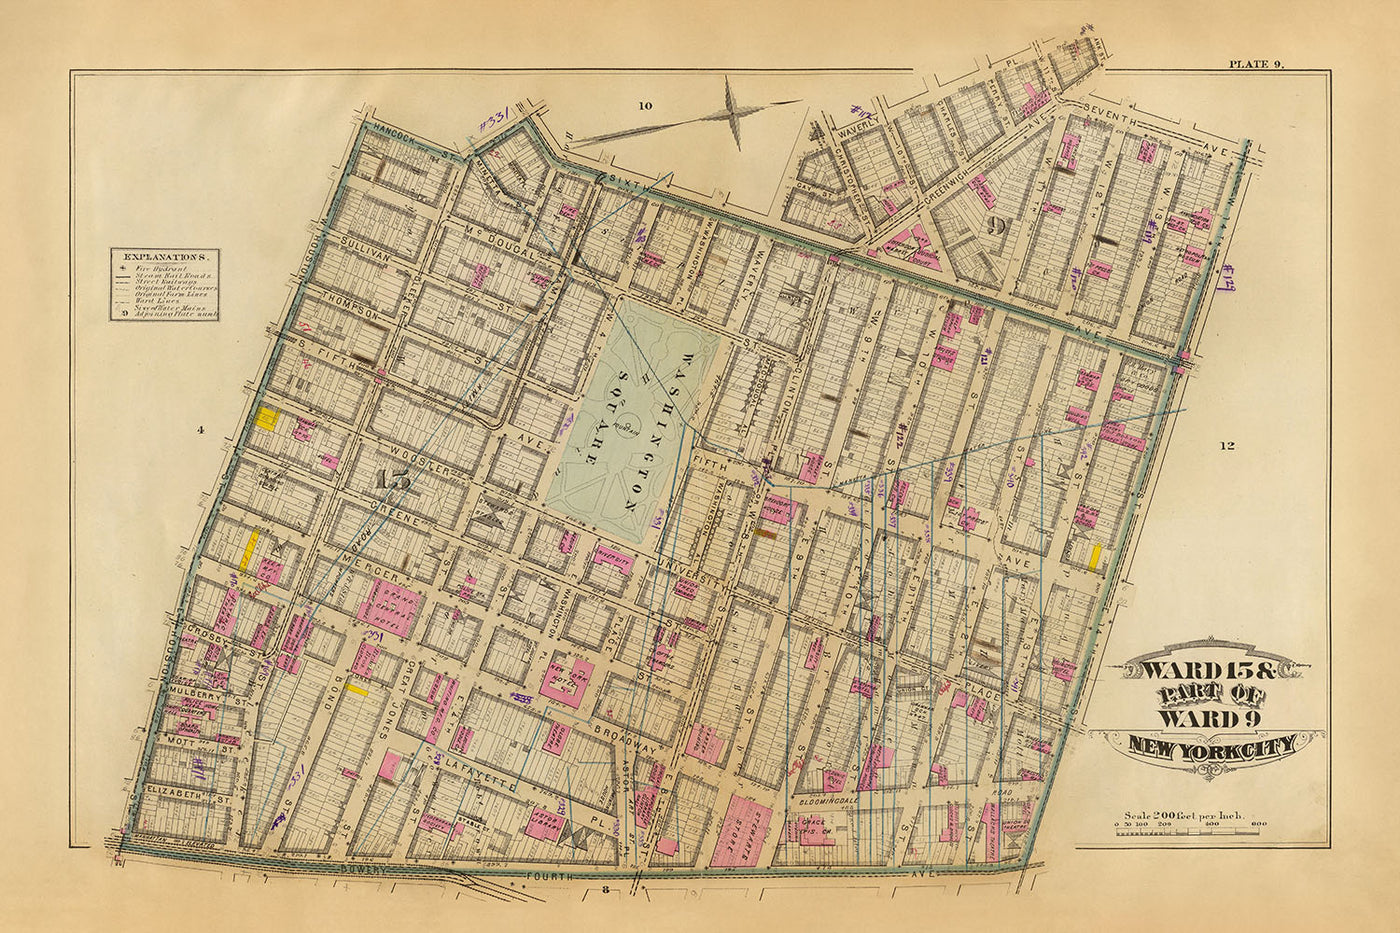 Old Map of Greenwich Village, NYC, 1879: Washington Sq, Jefferson Market, Broadway, Lafayette St, Steam Railways